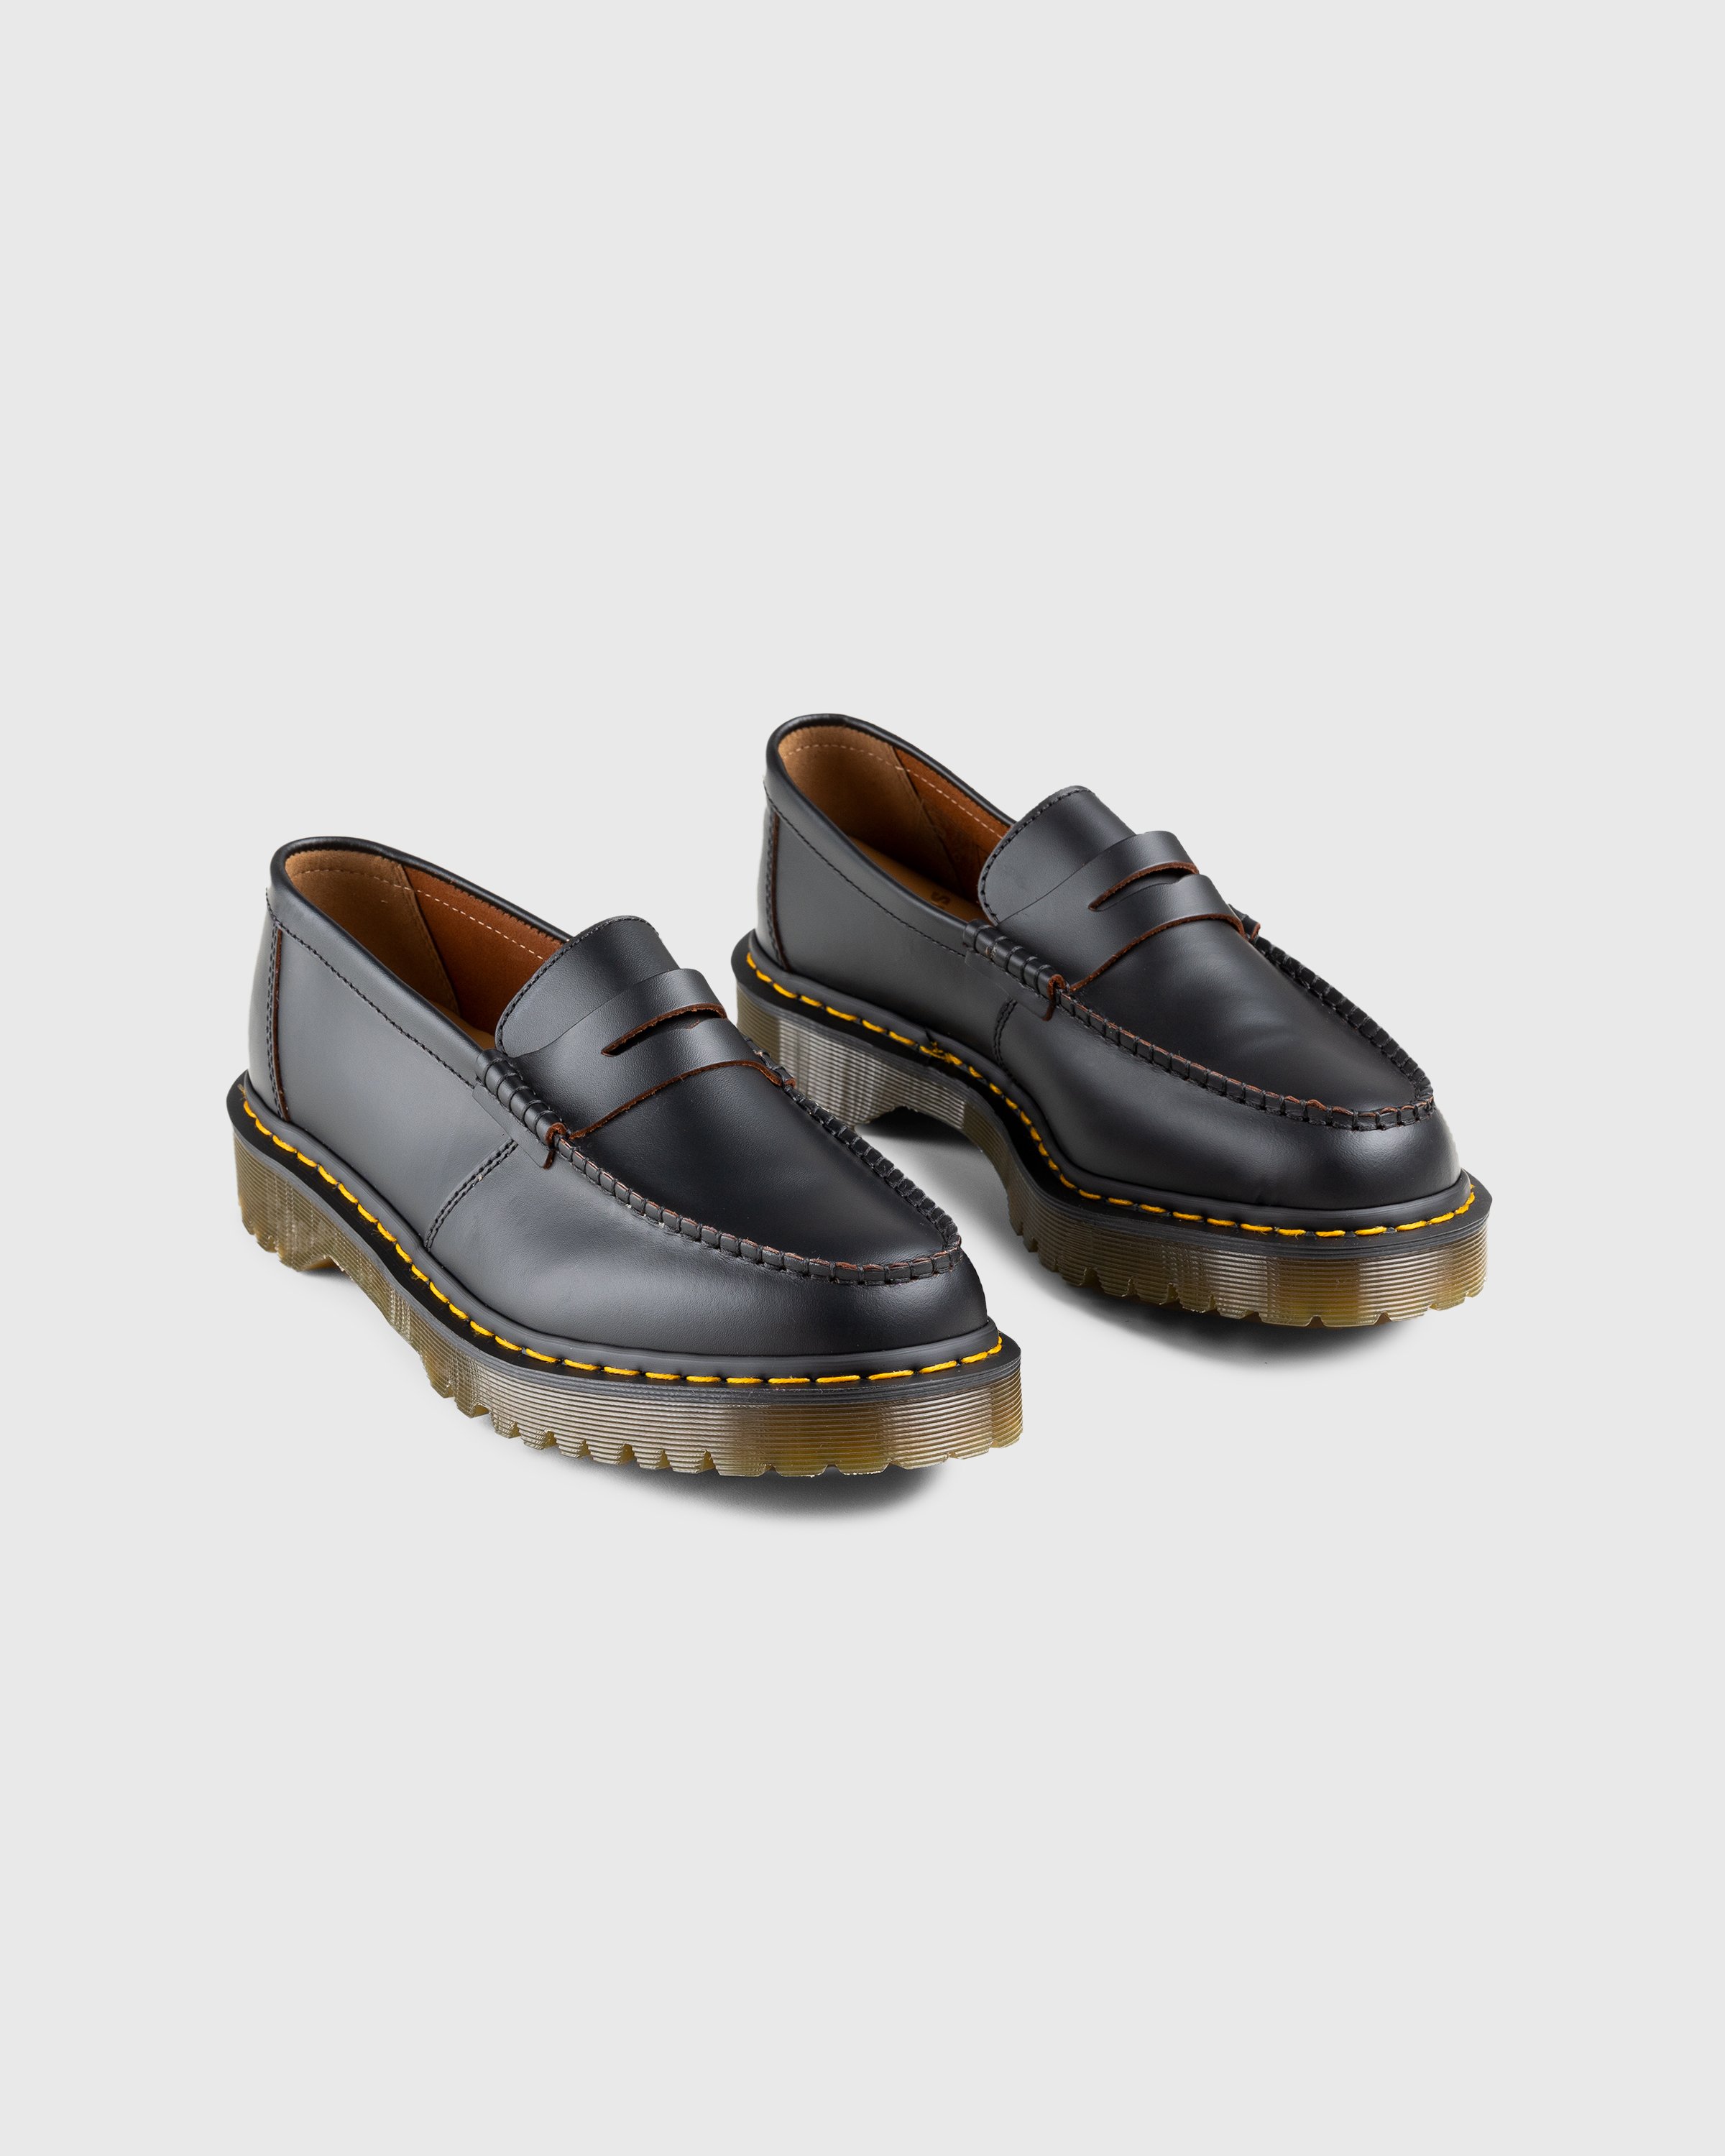 Dr. Martens - Penton Bex Quilon Leather Loafers Black - Footwear - Black - Image 3